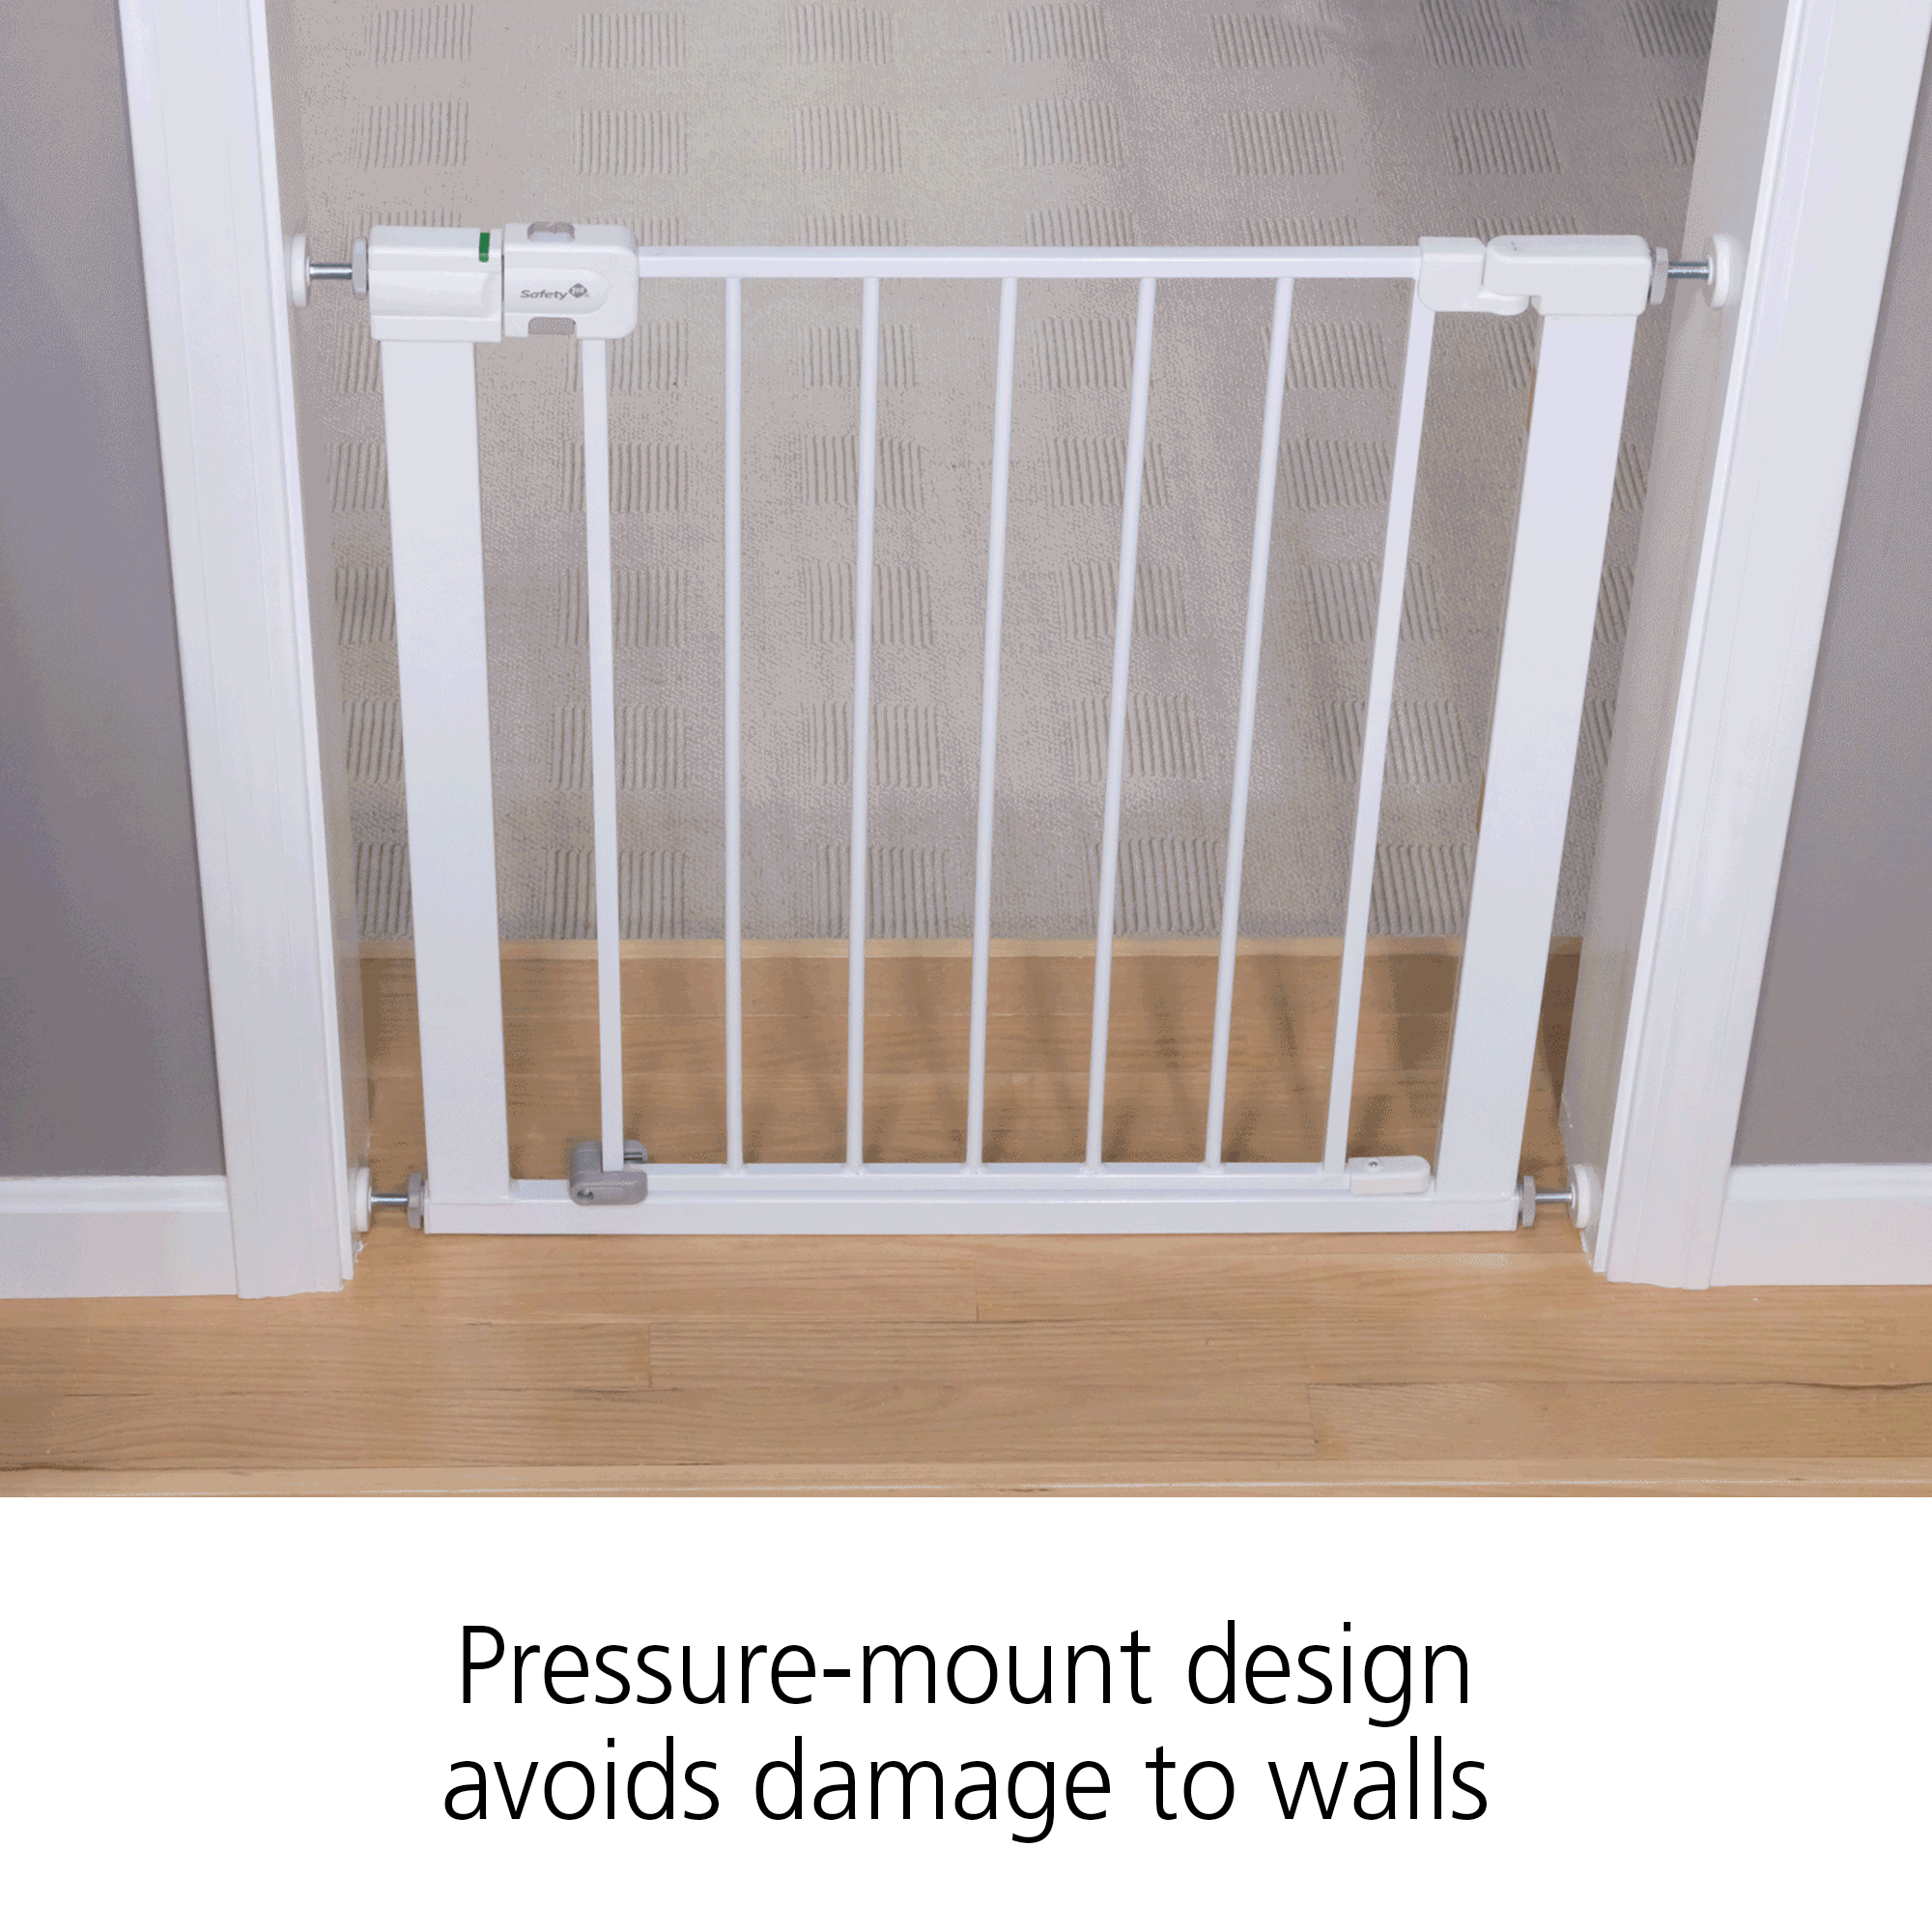 Pressure-mount design avoids damage to walls.